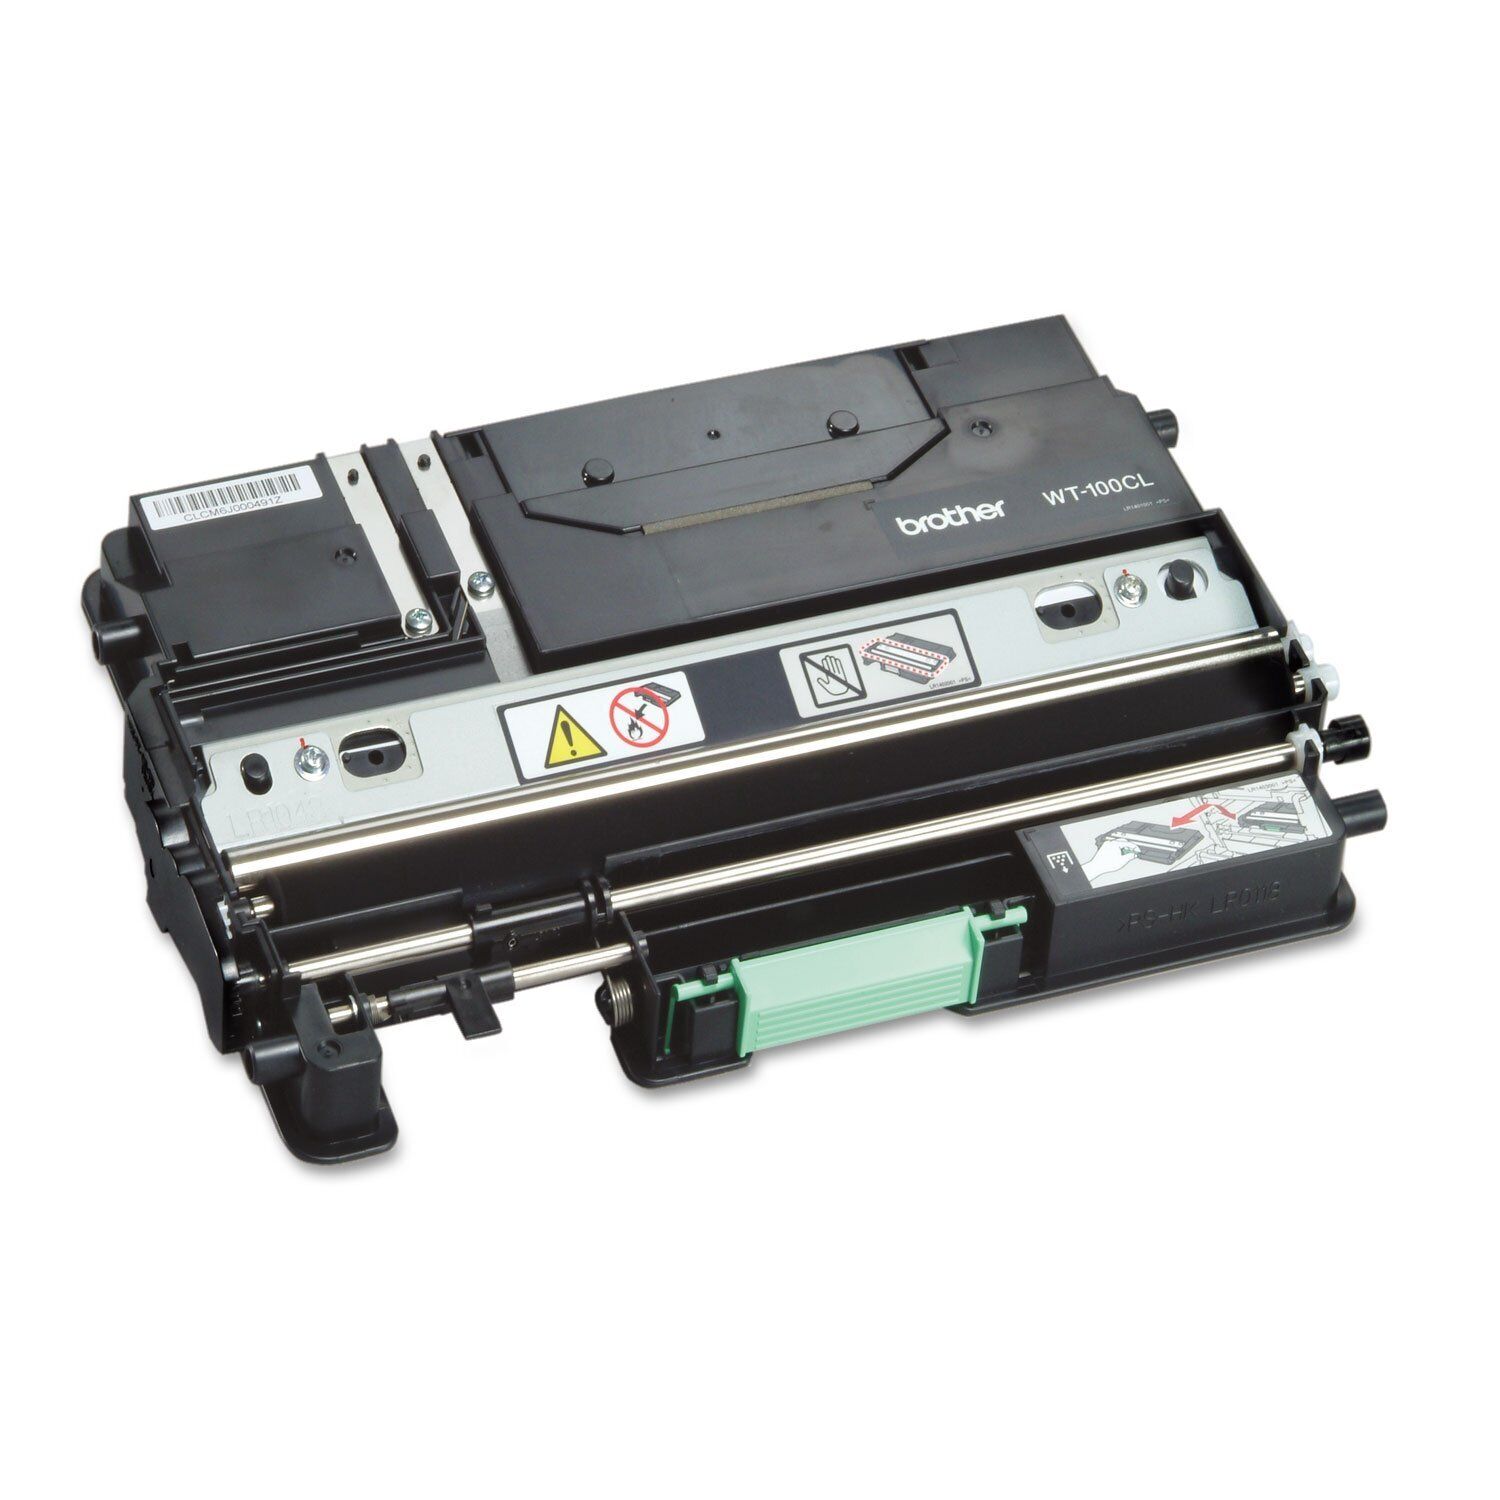 WT100CL MFC-9440CN 1 Waster Toner Pack Printer Accessory, BLACK